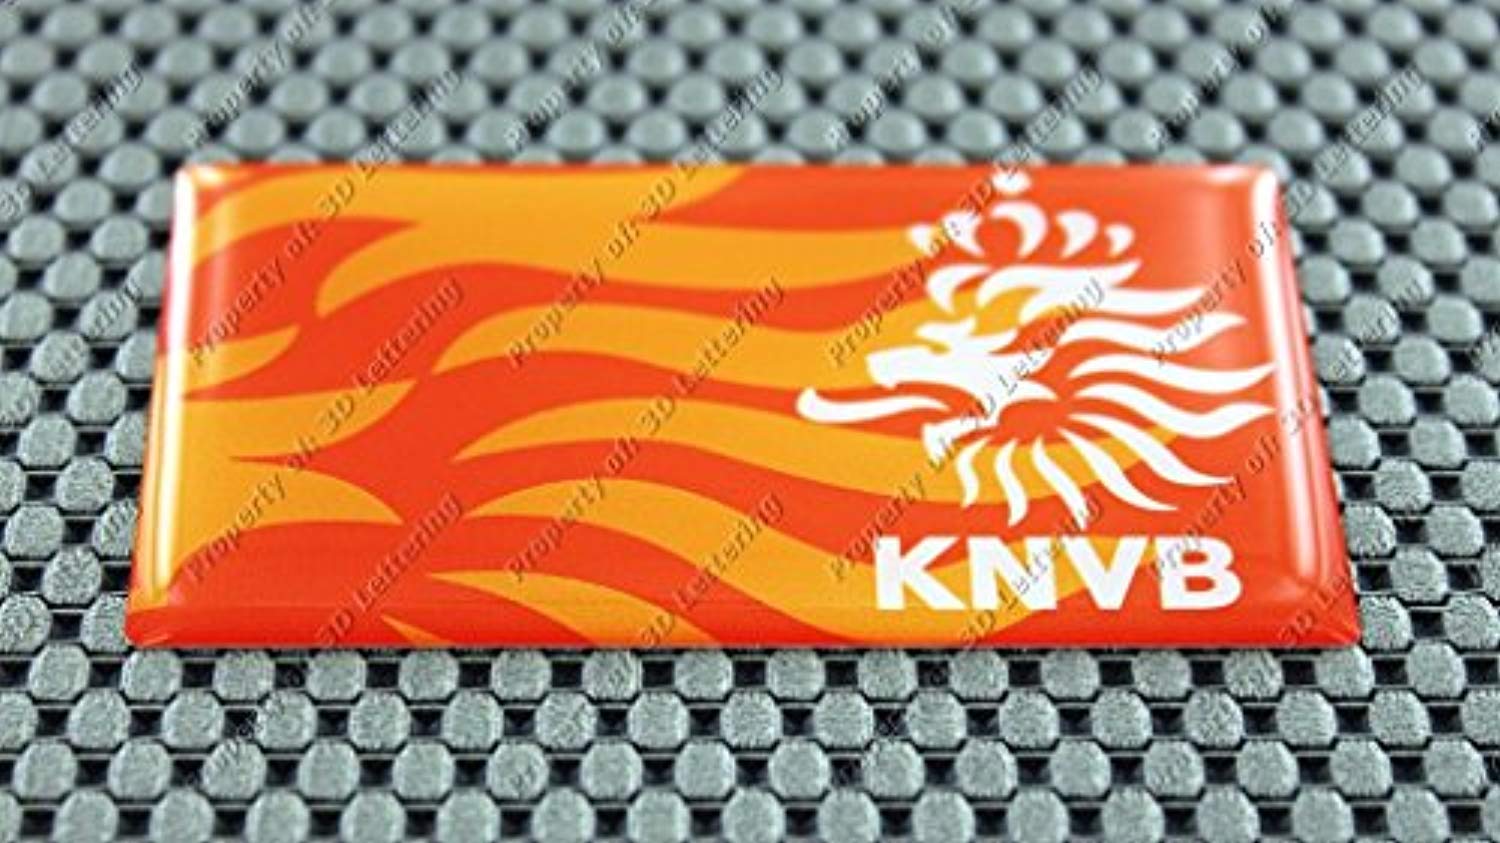 knvb logo wallpaper